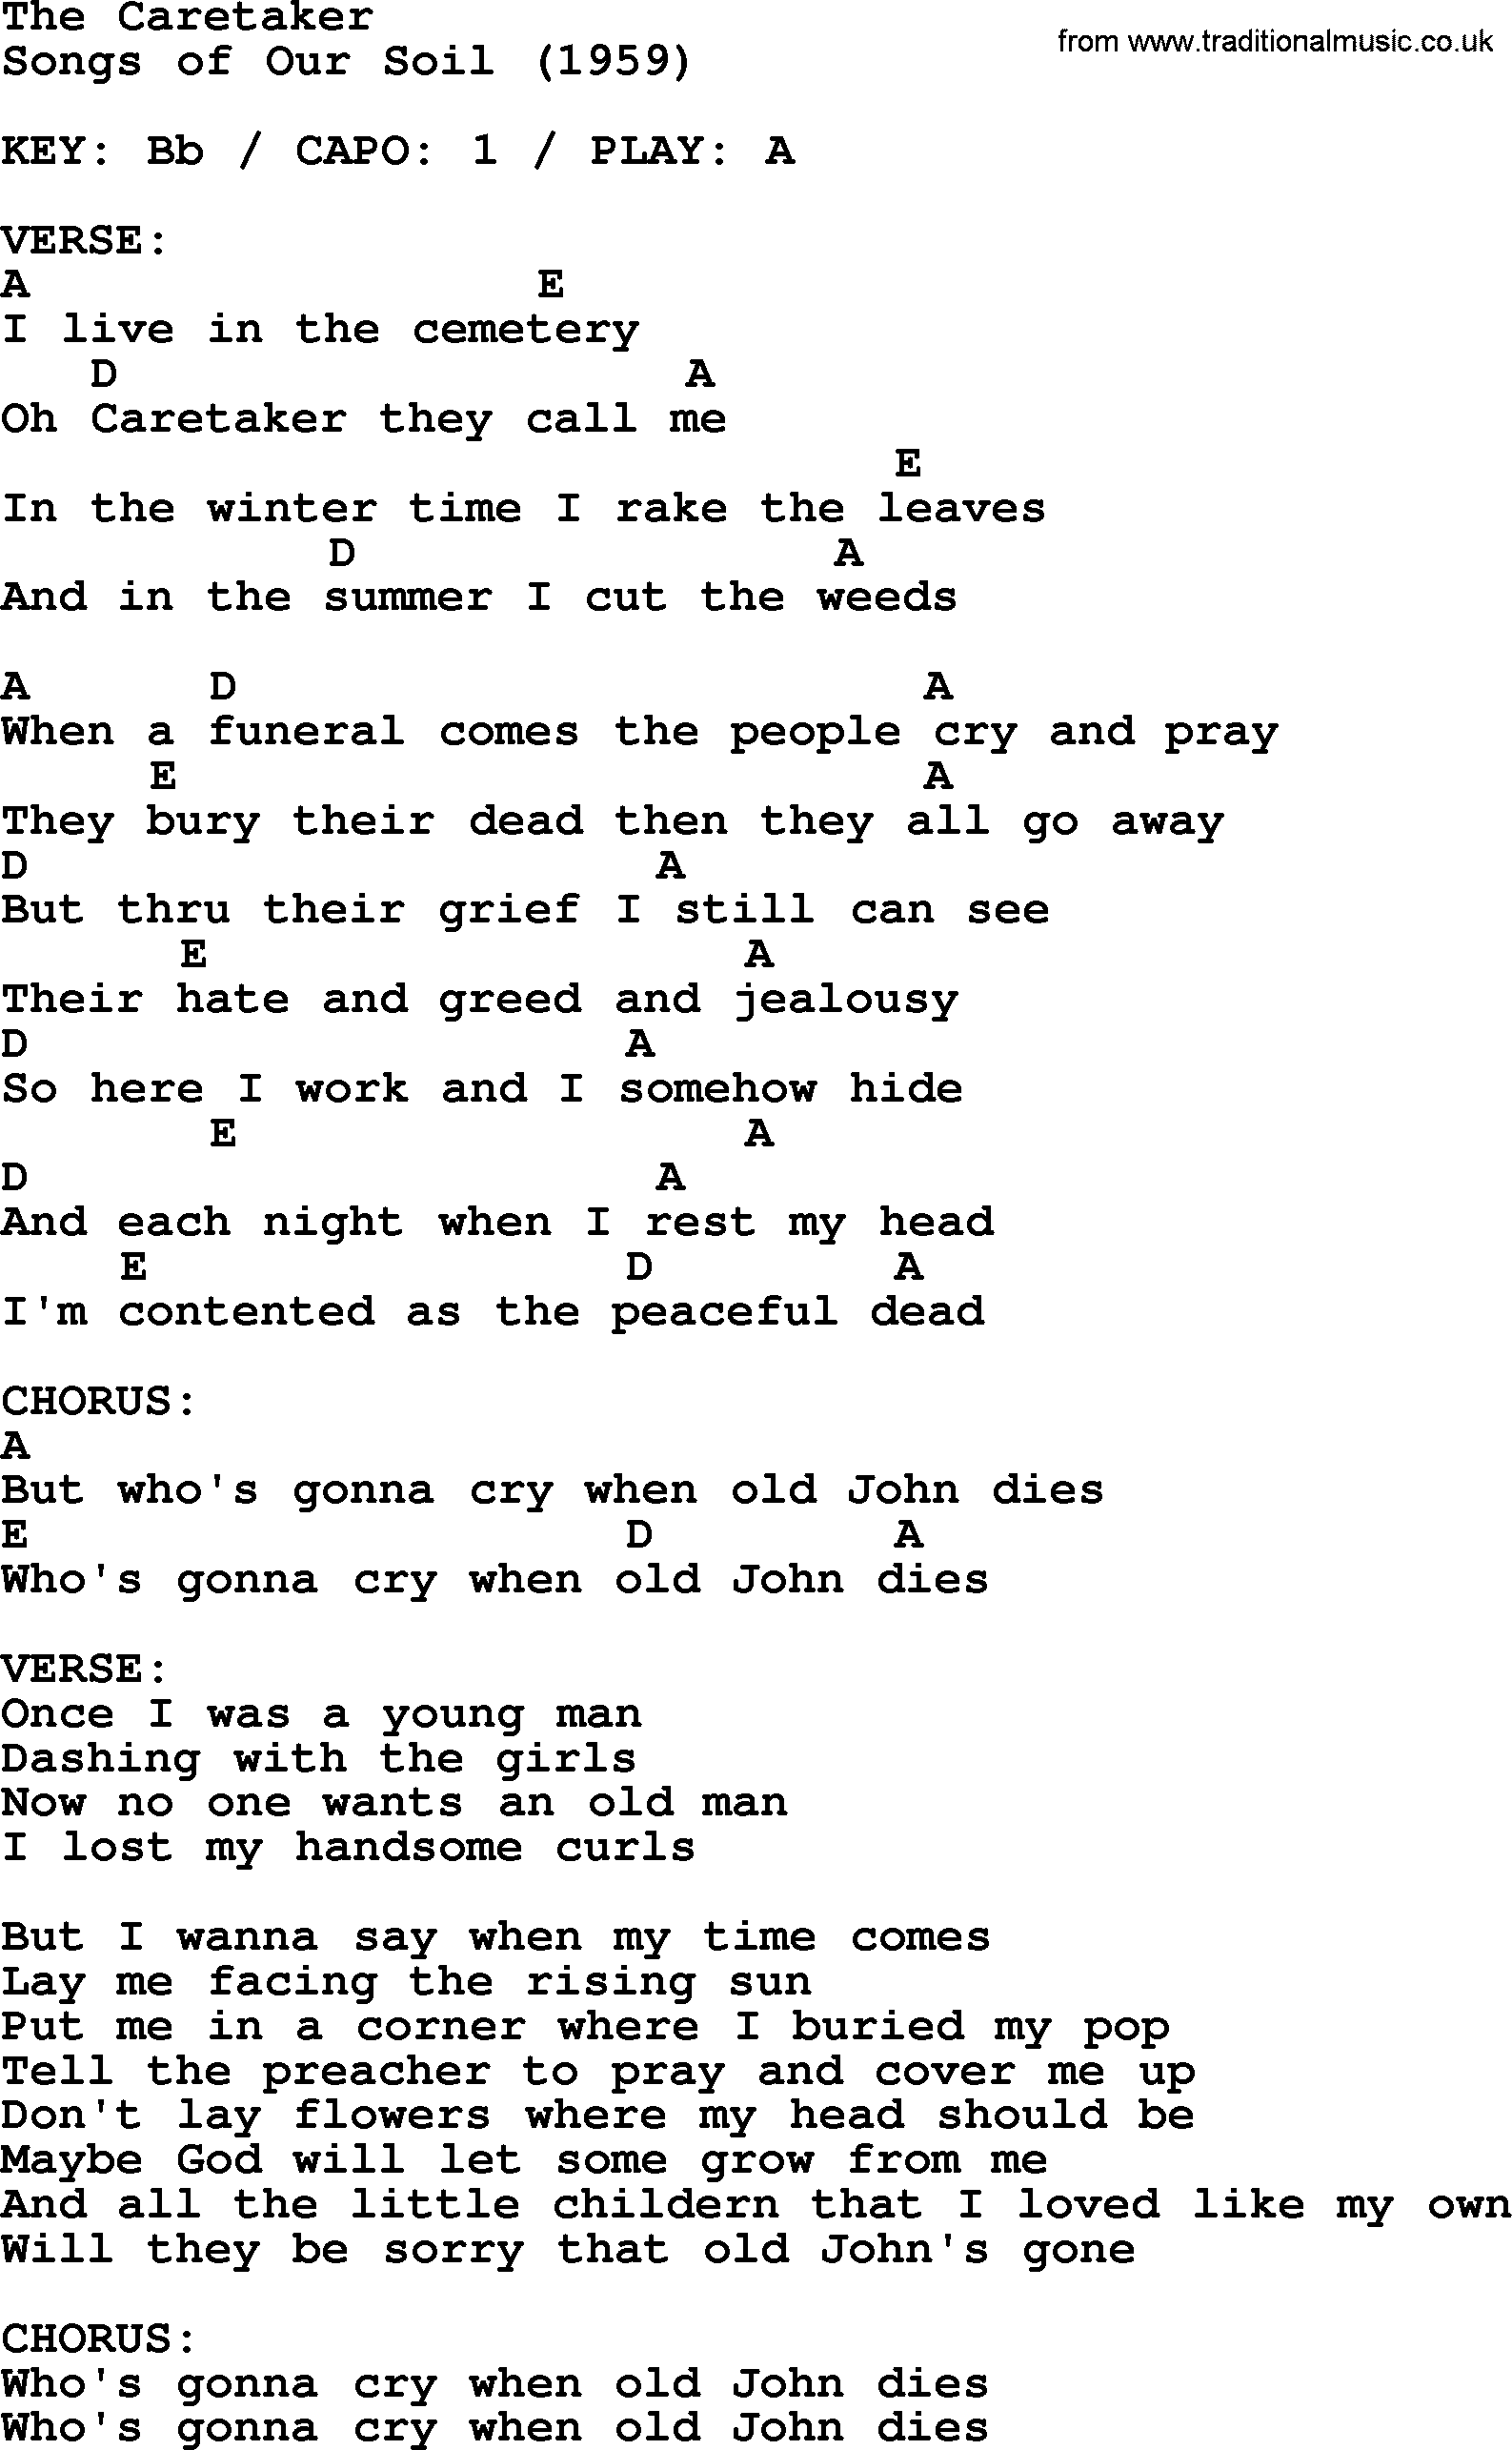 Johnny Cash song The Caretaker, lyrics and chords